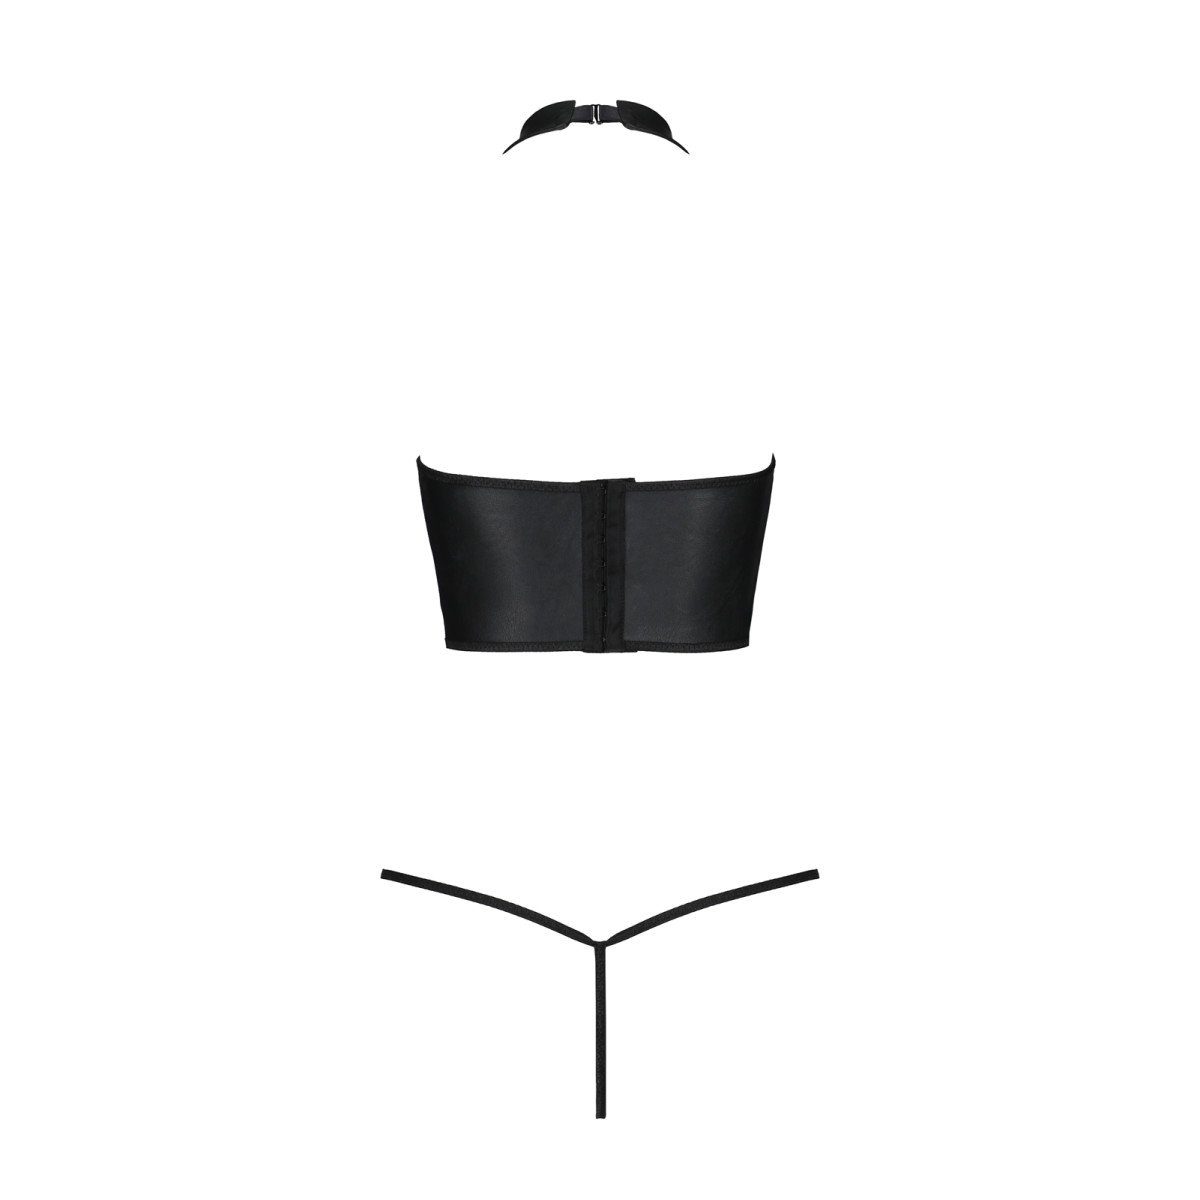 Schalen-BH (L/XL,S/M,XXL) 2pcs with - open Passion-Exklusiv set PE Set: Genevia black bra